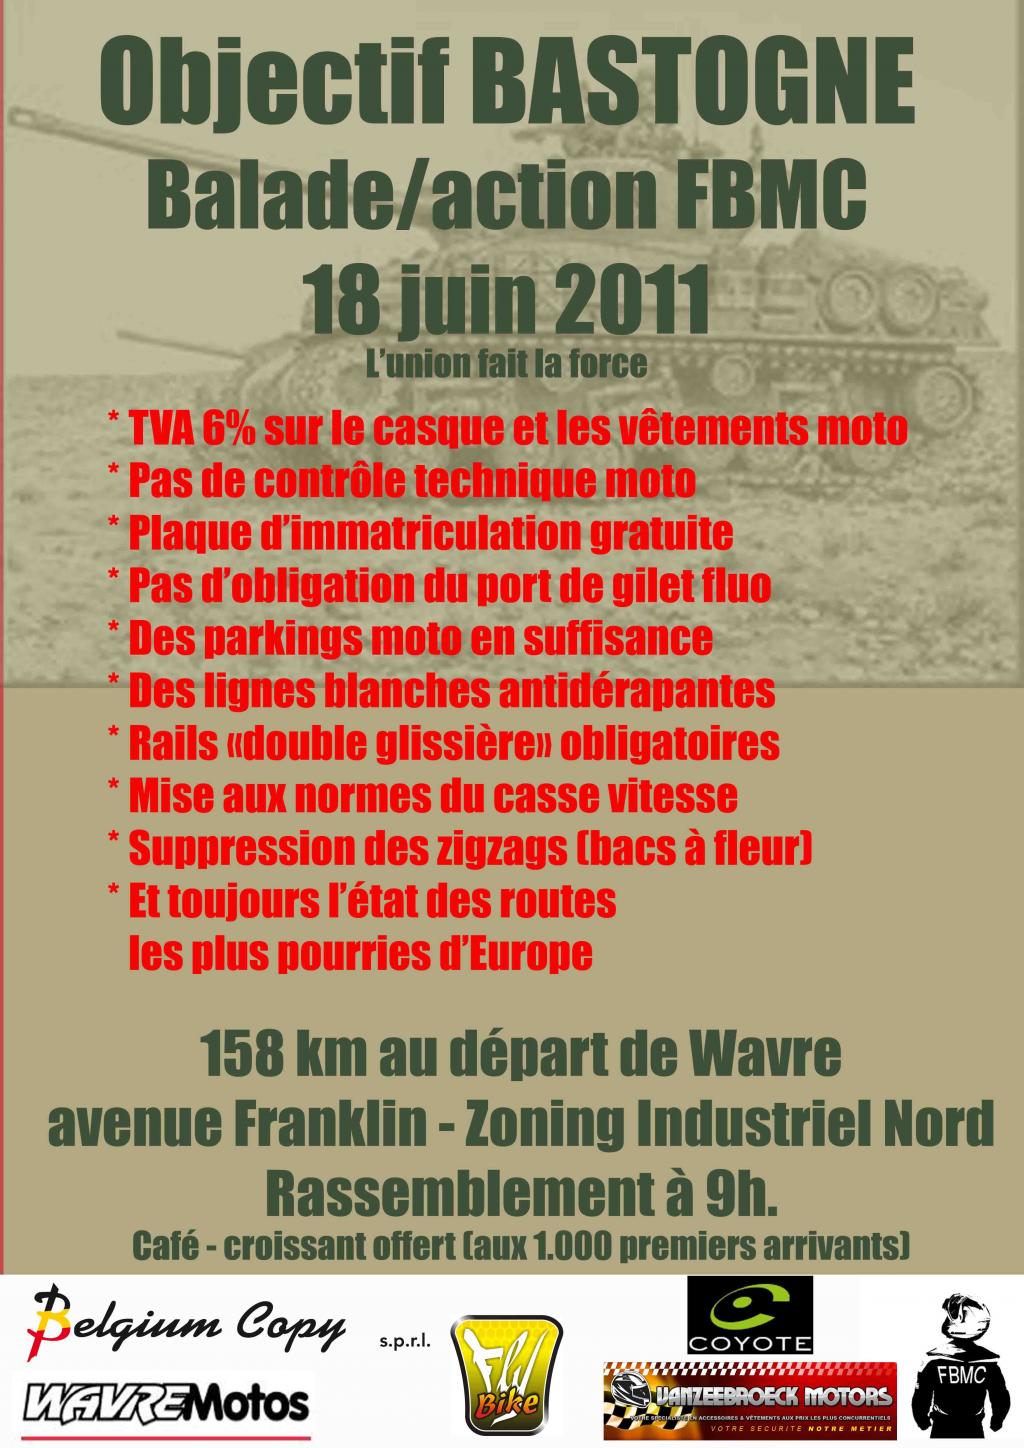 Samedi 18 juin 2011 : Manifestation FBMC @ Wavre Affiche-18-juin-bd-28afb25